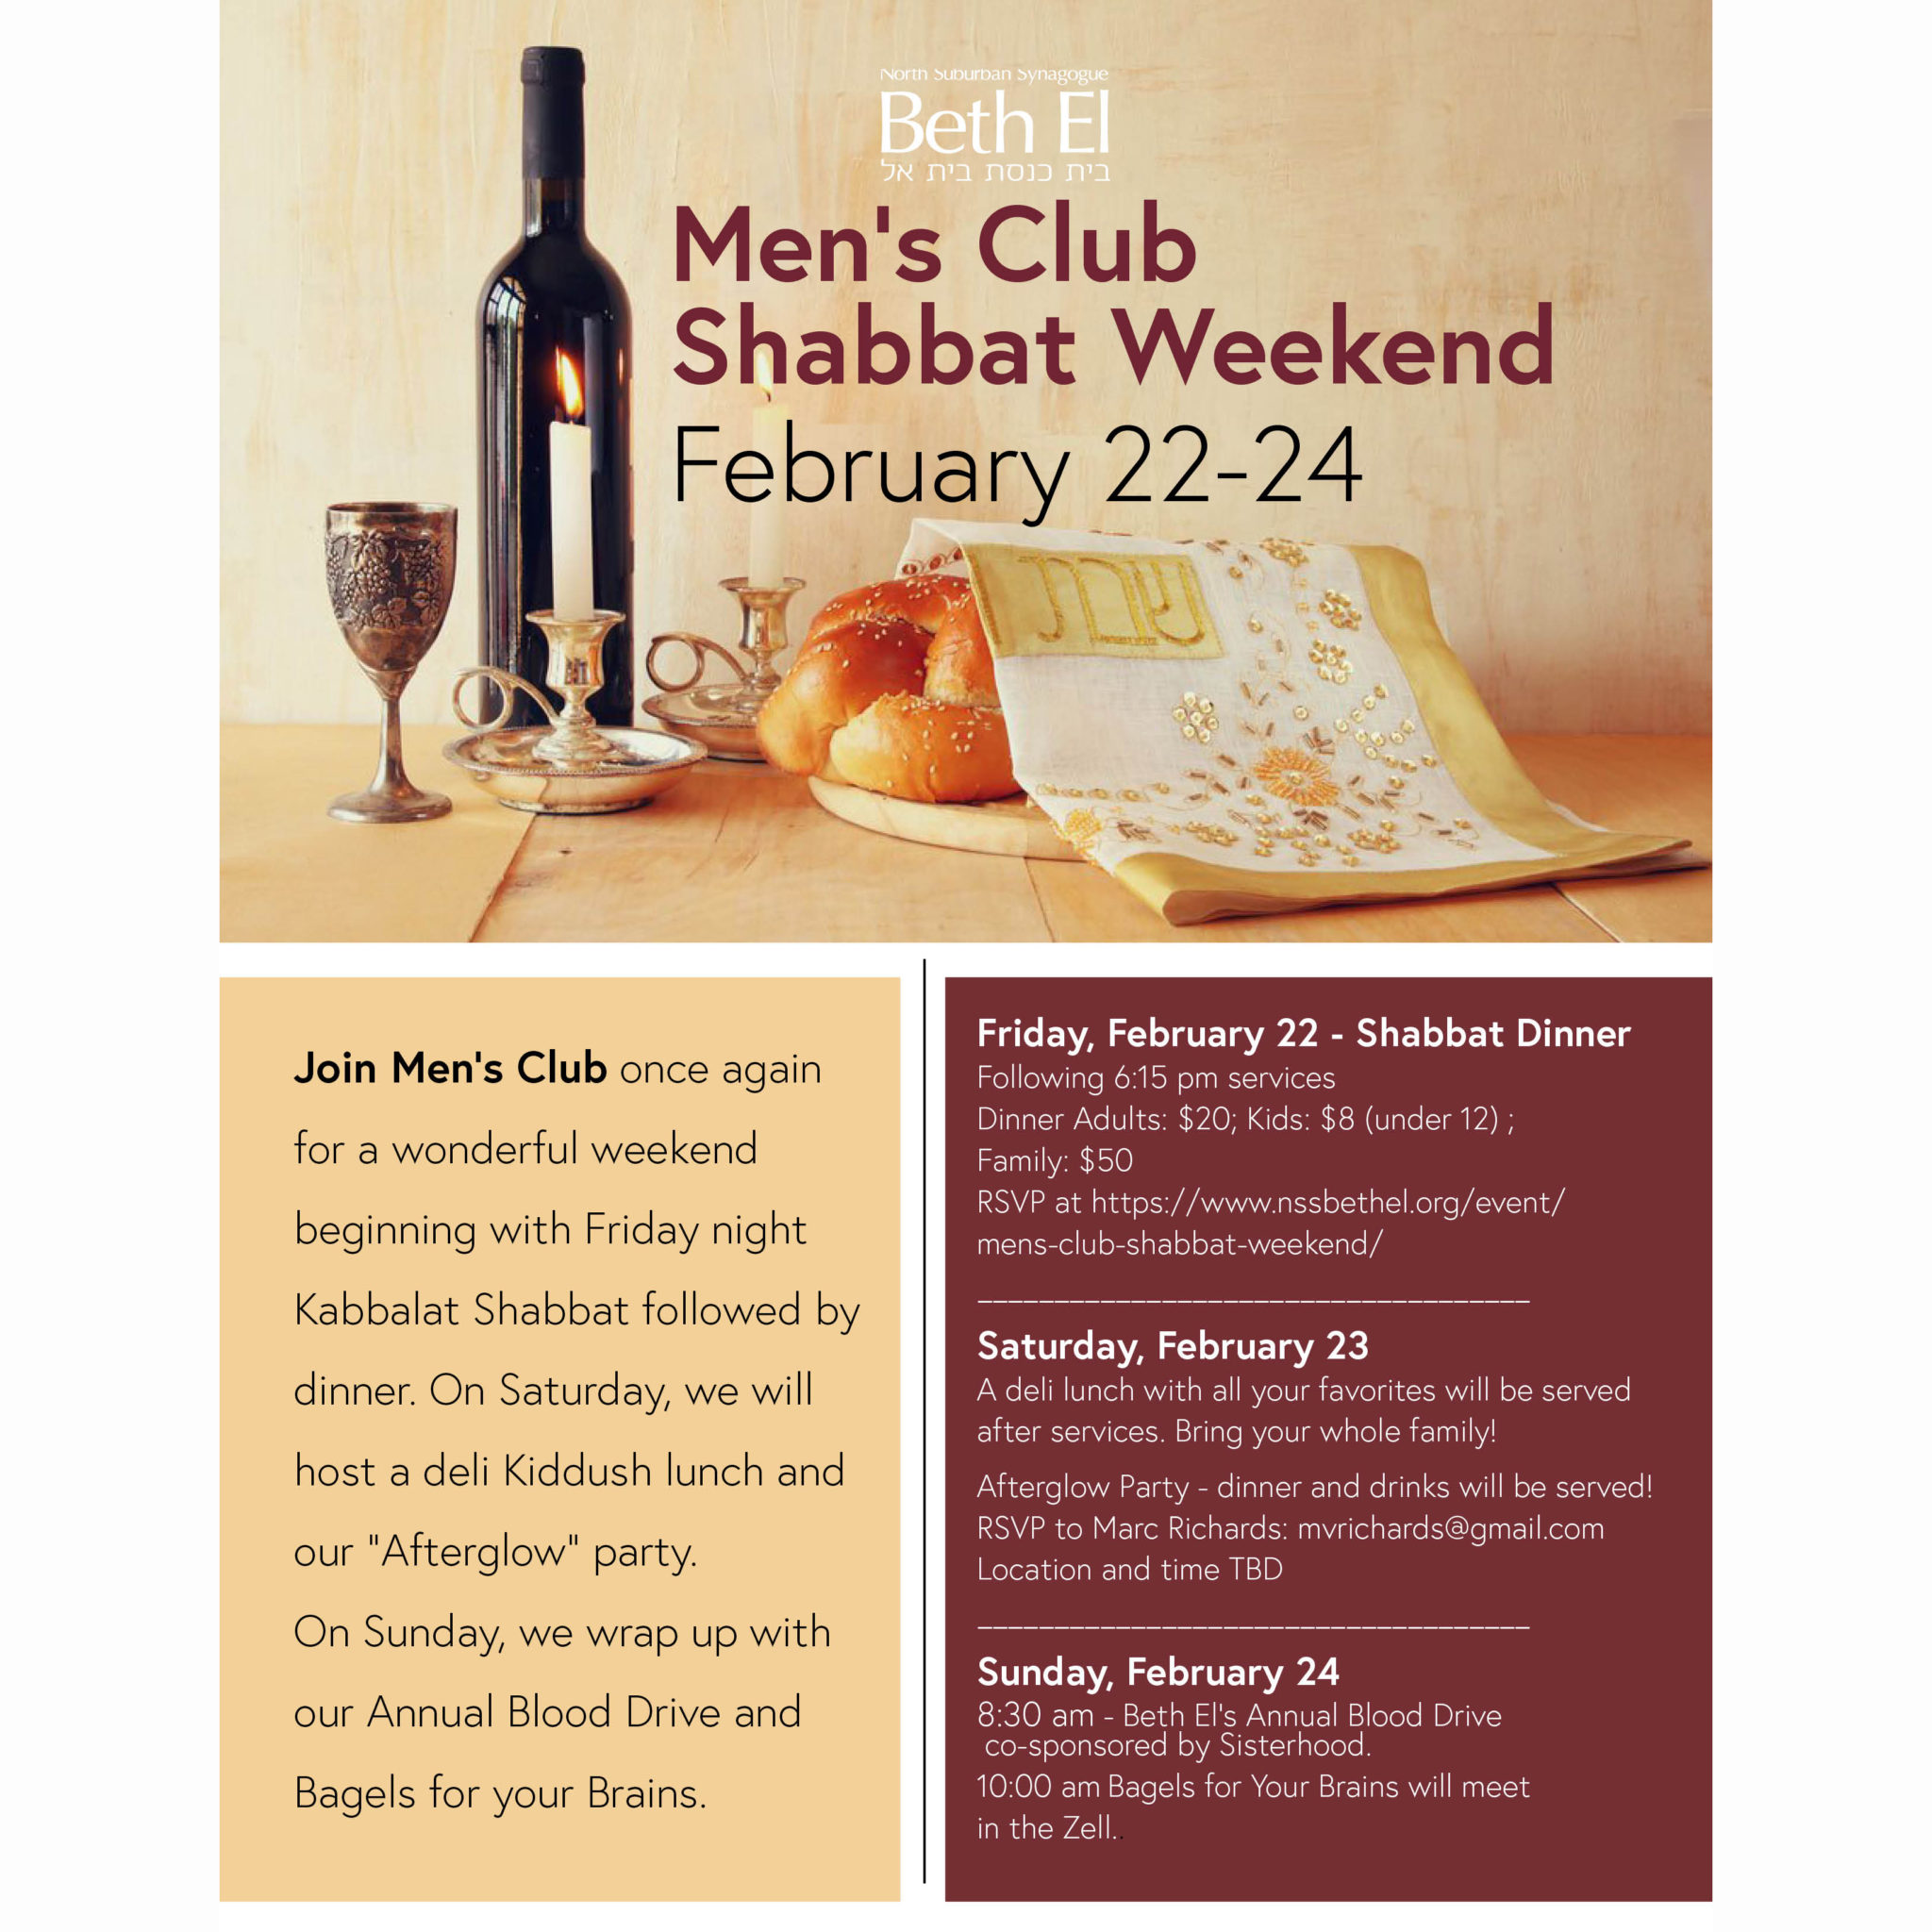 Men’s Club Shabbat WeekendNorth Suburban Synagogue Beth El2048 x 2048